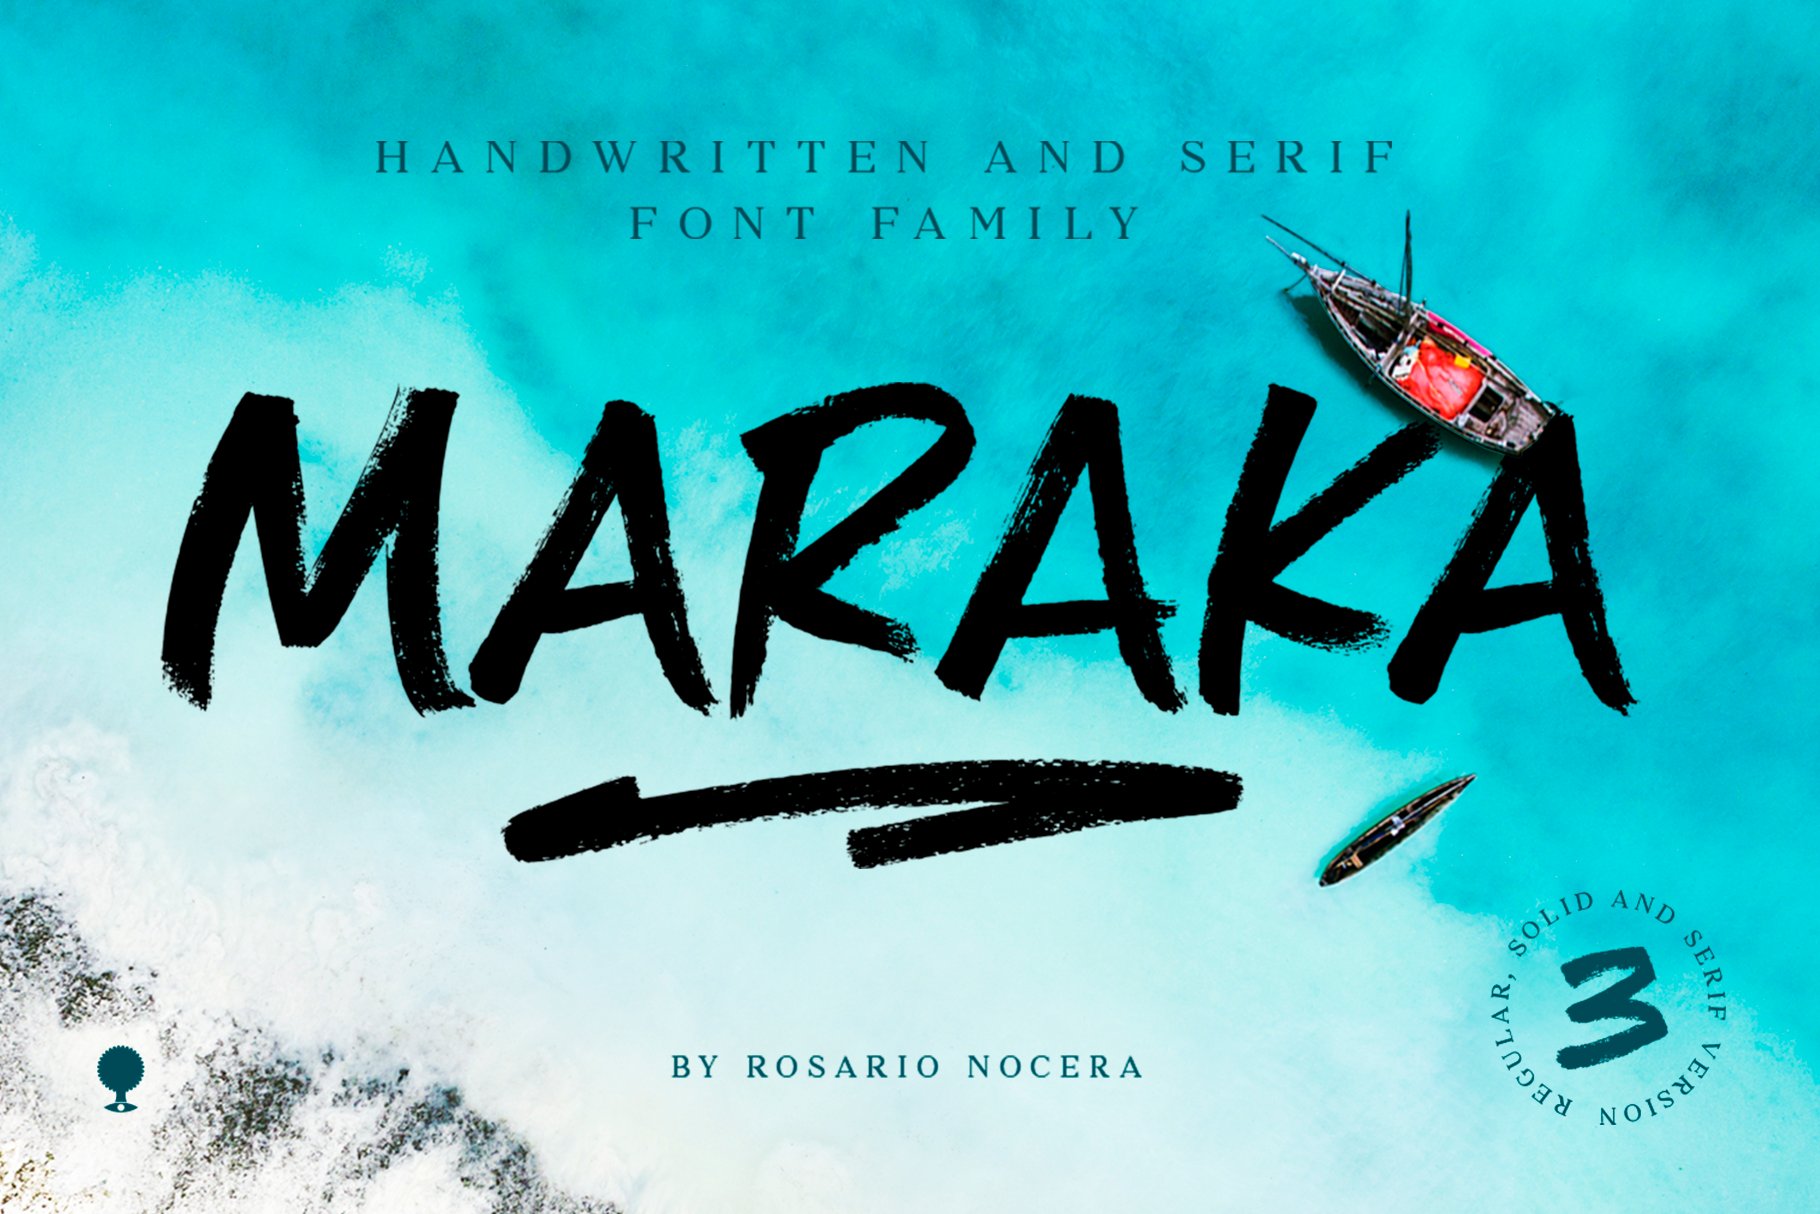 Maraka / handwrite font family cover image.